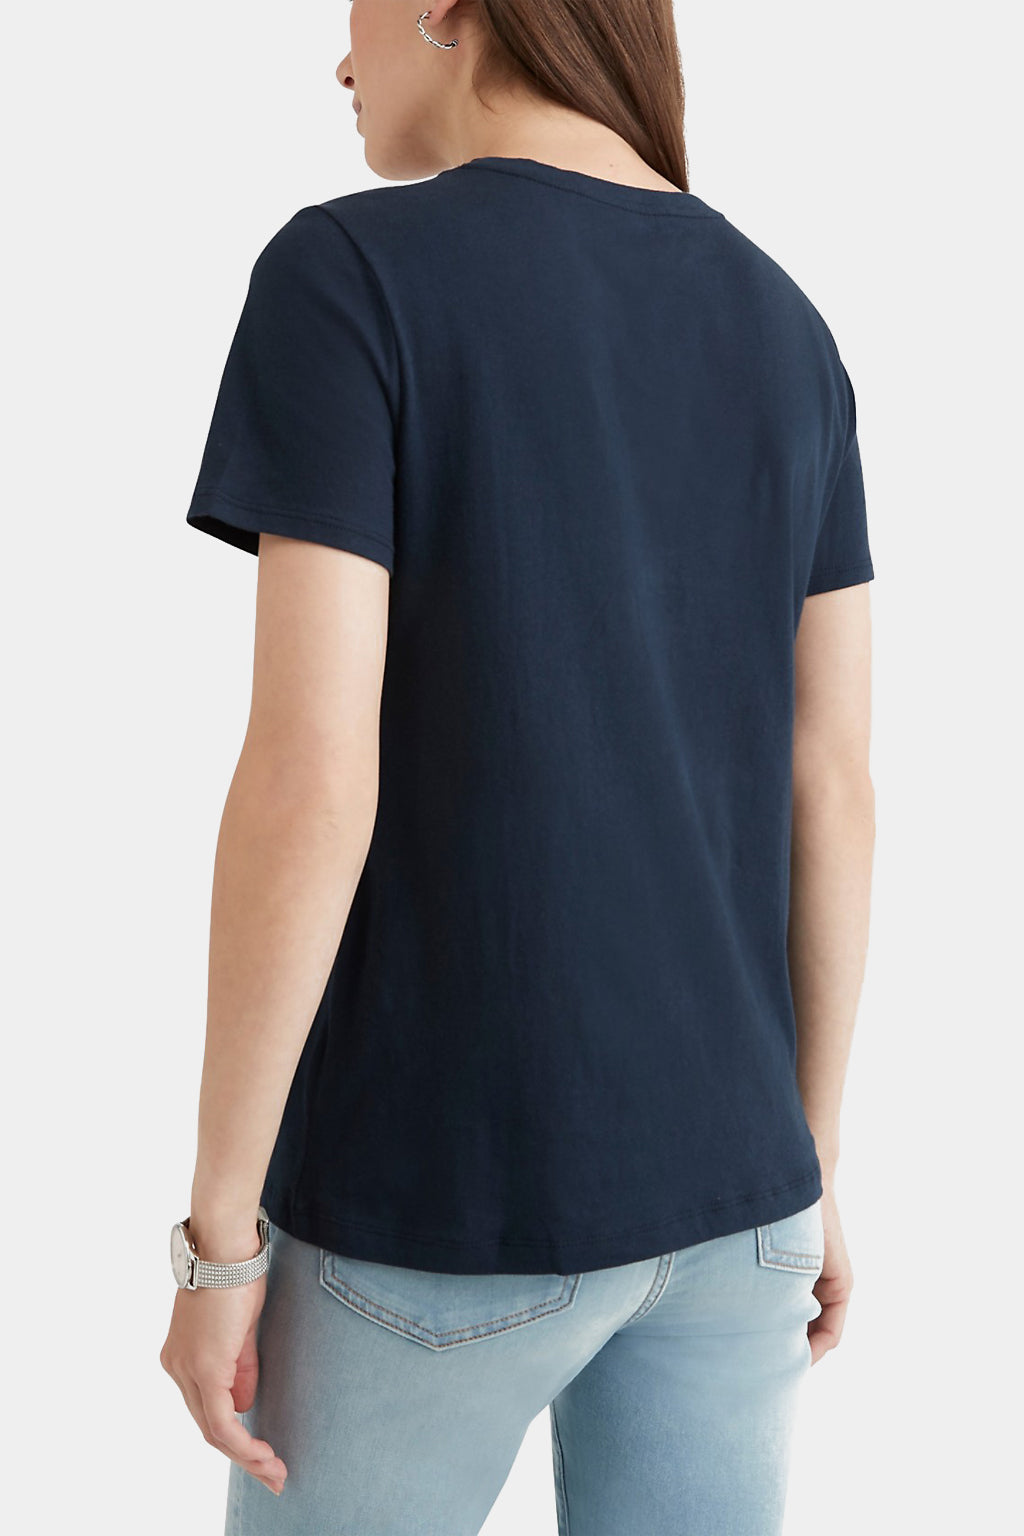 Tommy Hilfiger - Essential Flag Stripe T-shirt